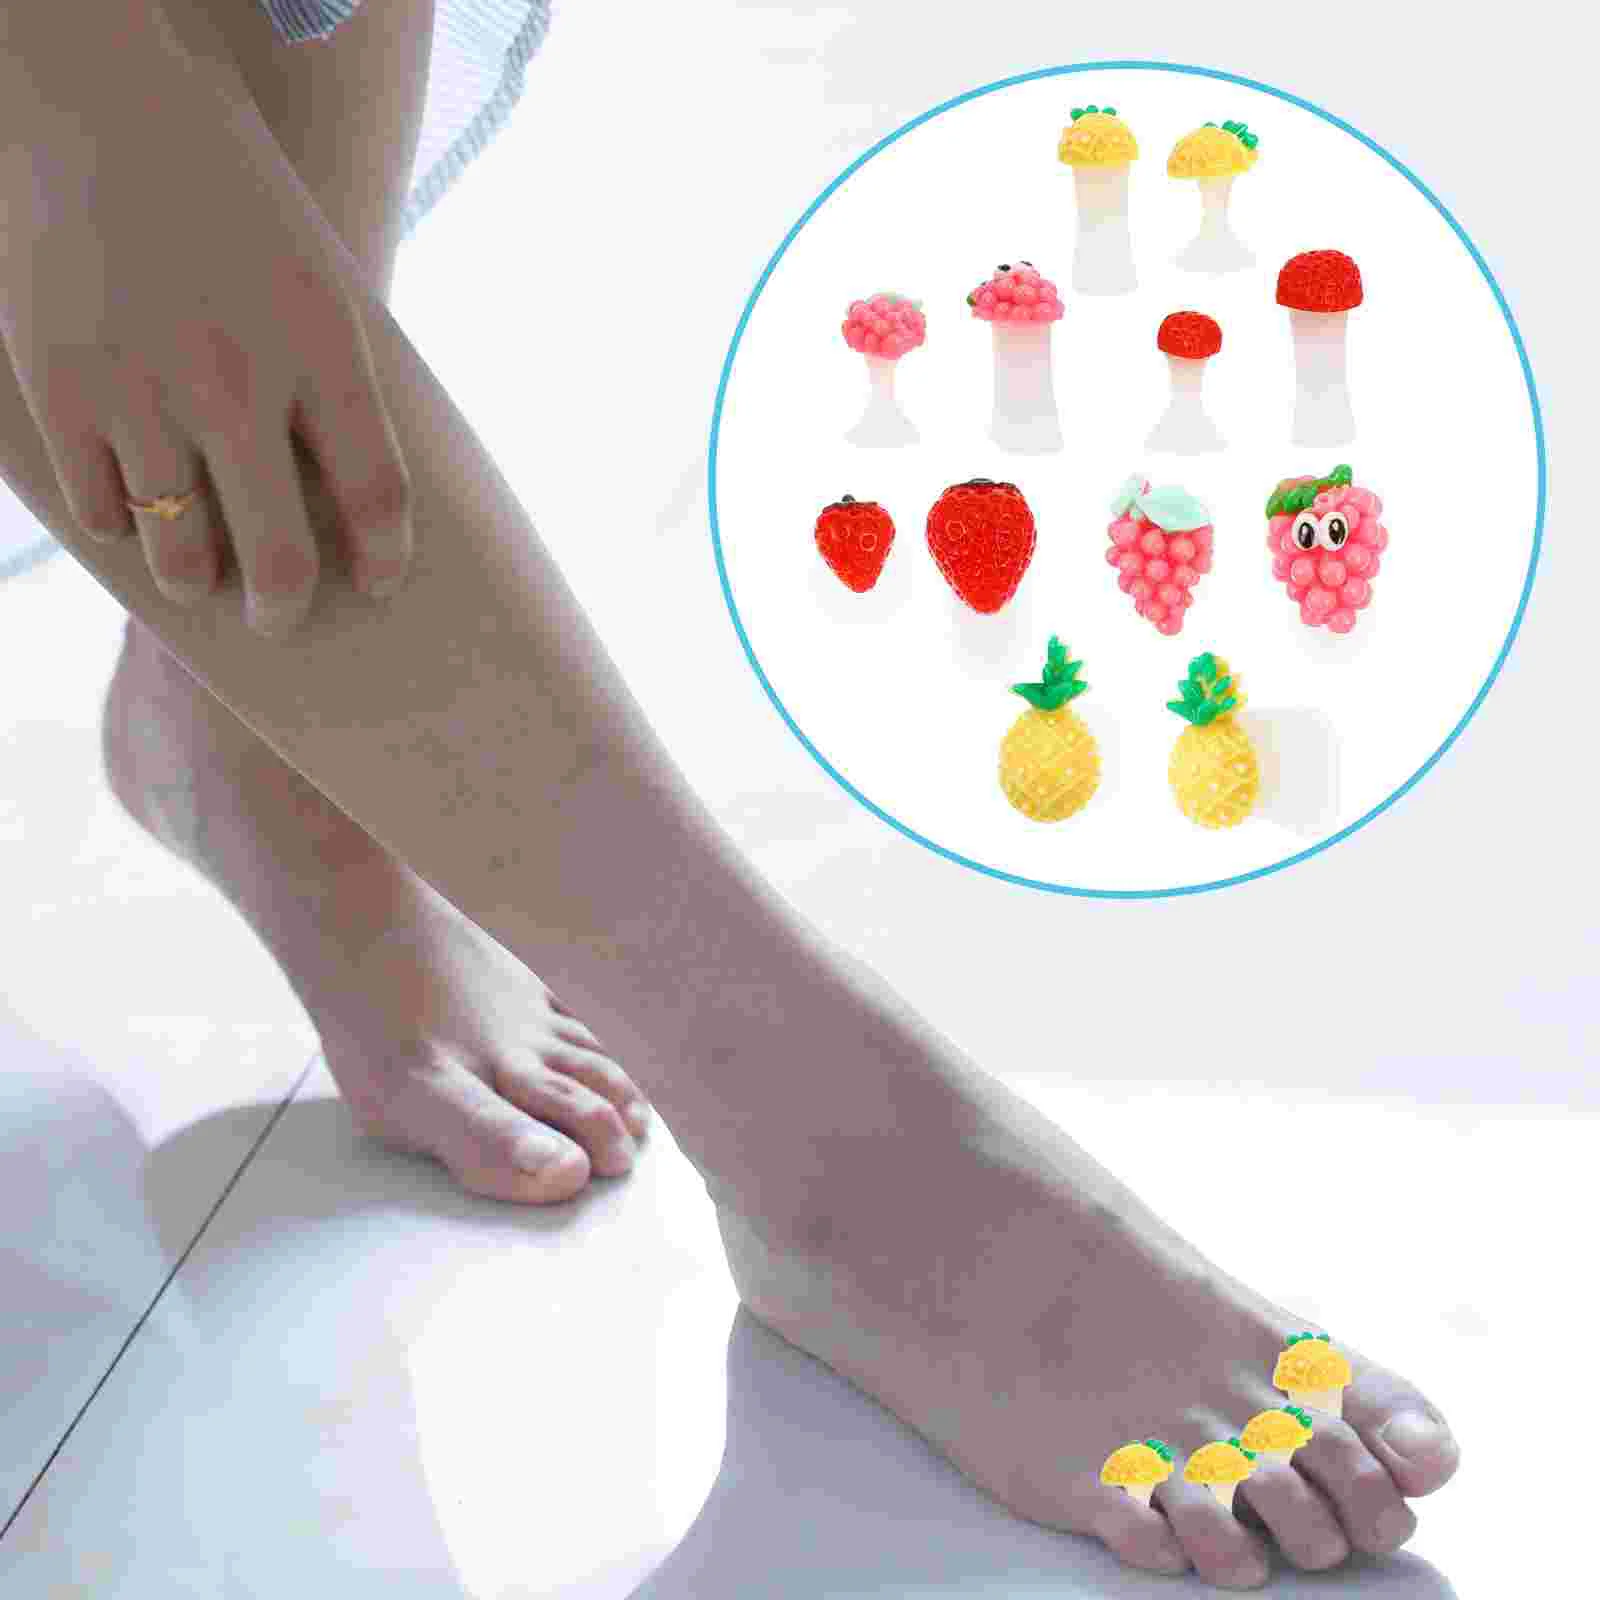 

24 Pcs Nail Toe Separator Tools Protector Silicone Spacer Manicure Salon Supplies Separators Silica Gel Colorful Pedicure